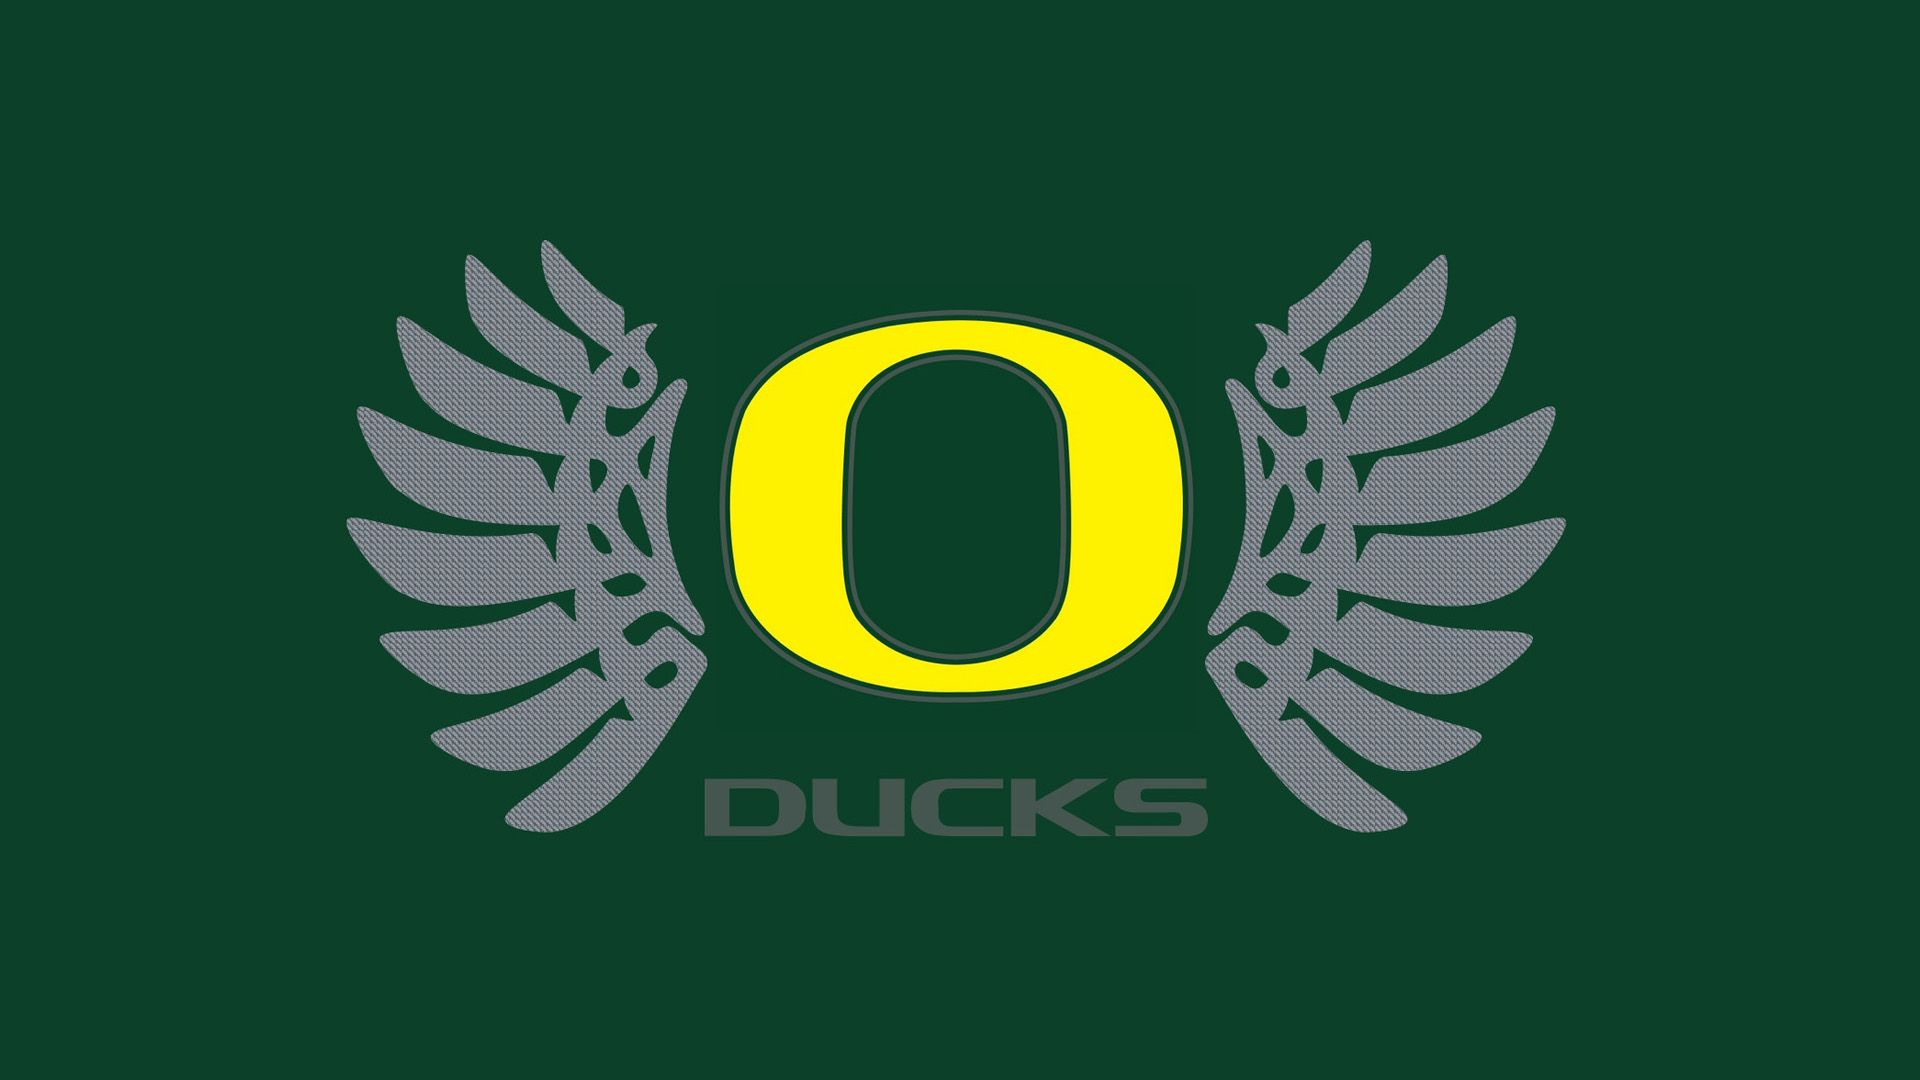 1920x1080 oregon ducks logo wallpaper background 8294 | Oregon ducks logo, Oregon ducks, Oregon ducks basketball